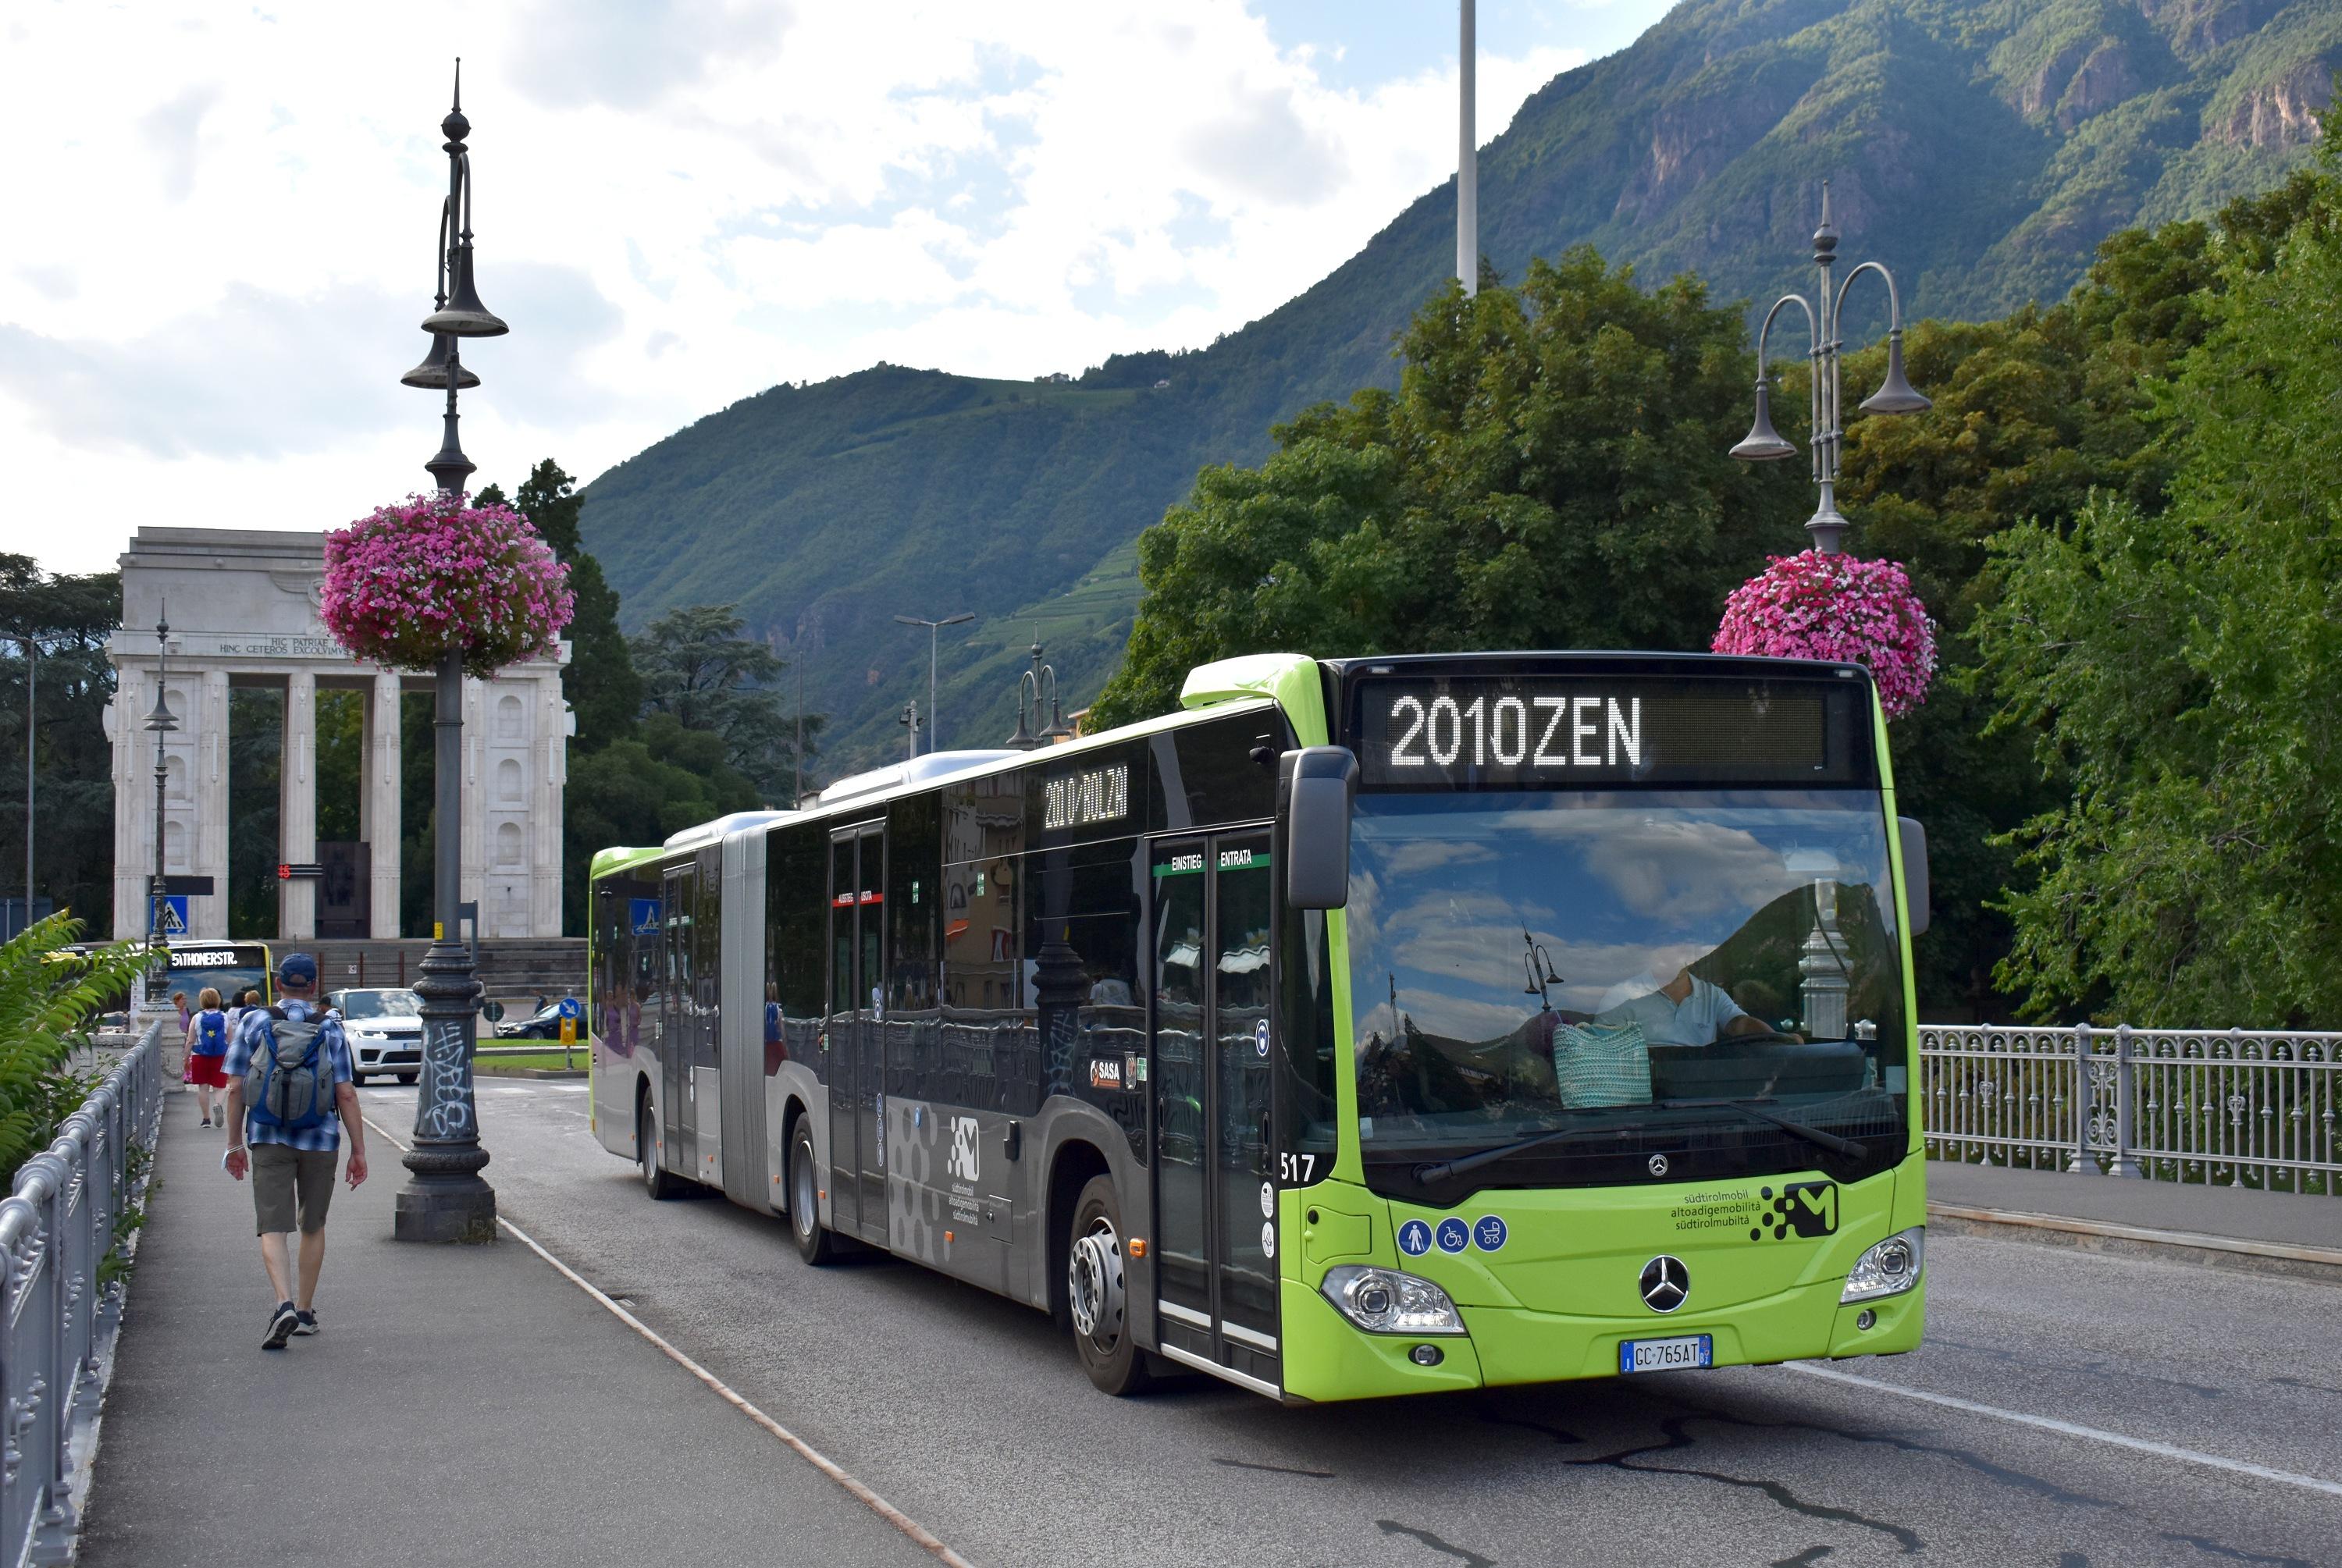 201 Bozen Busbahnhof/Autostazione Bozen-Siegesplatz/Piazza Vittoria